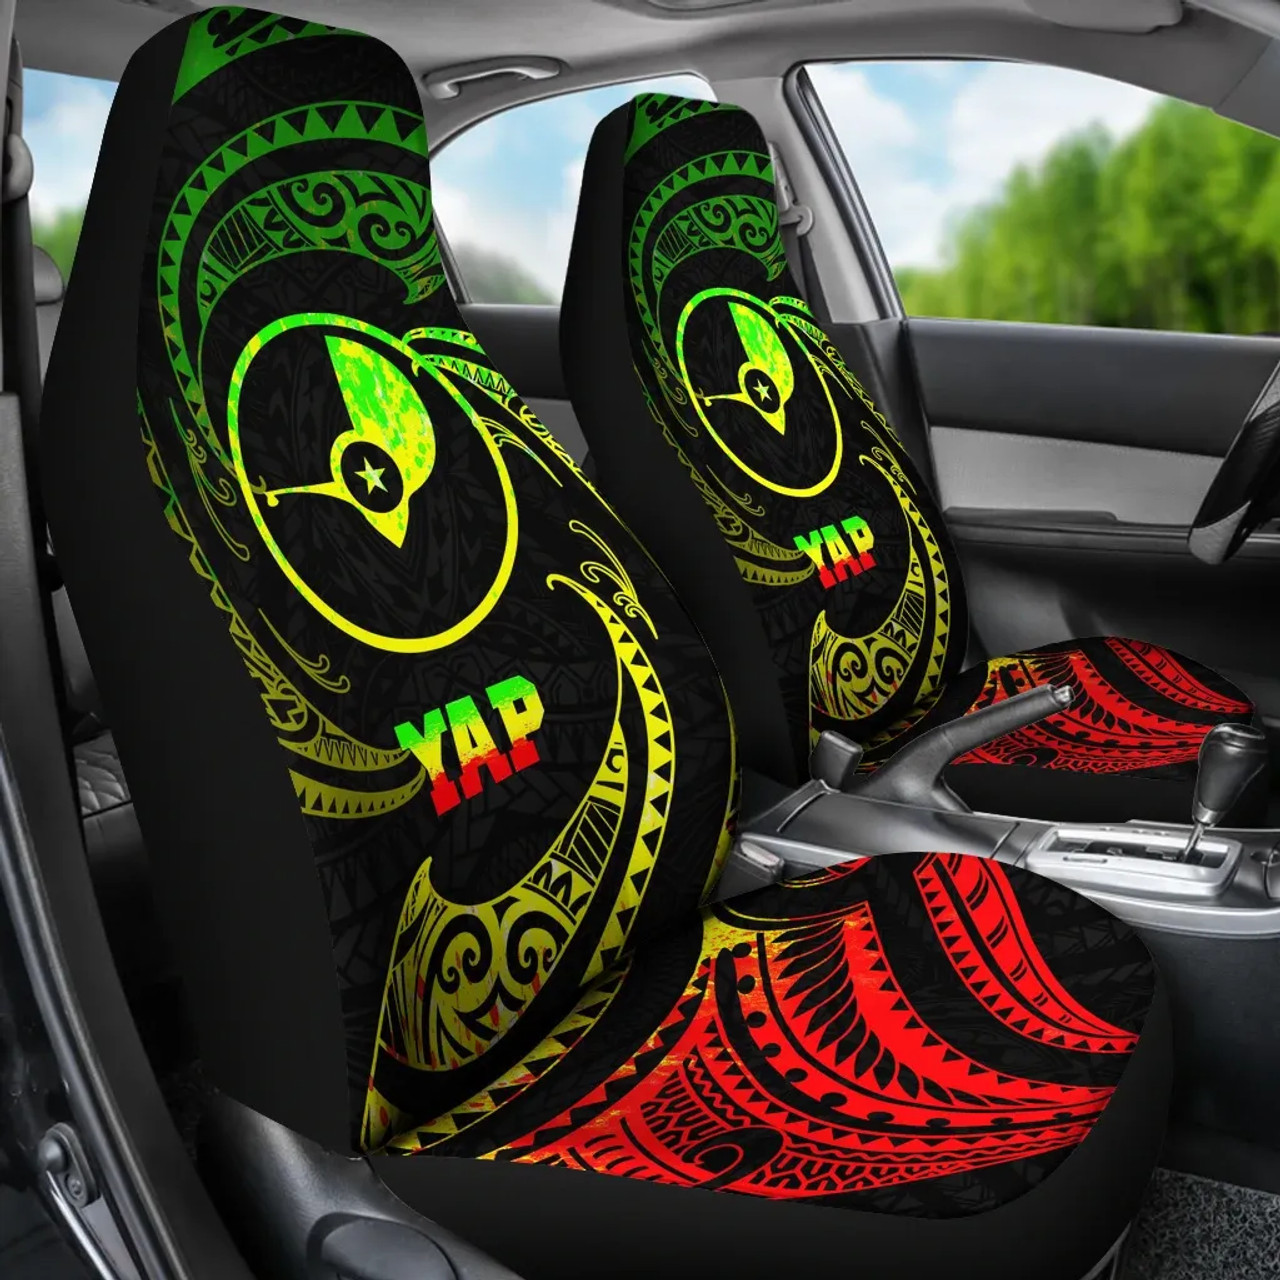 Yap Polynesian Car Seat Covers - Reggae Tribal Wave